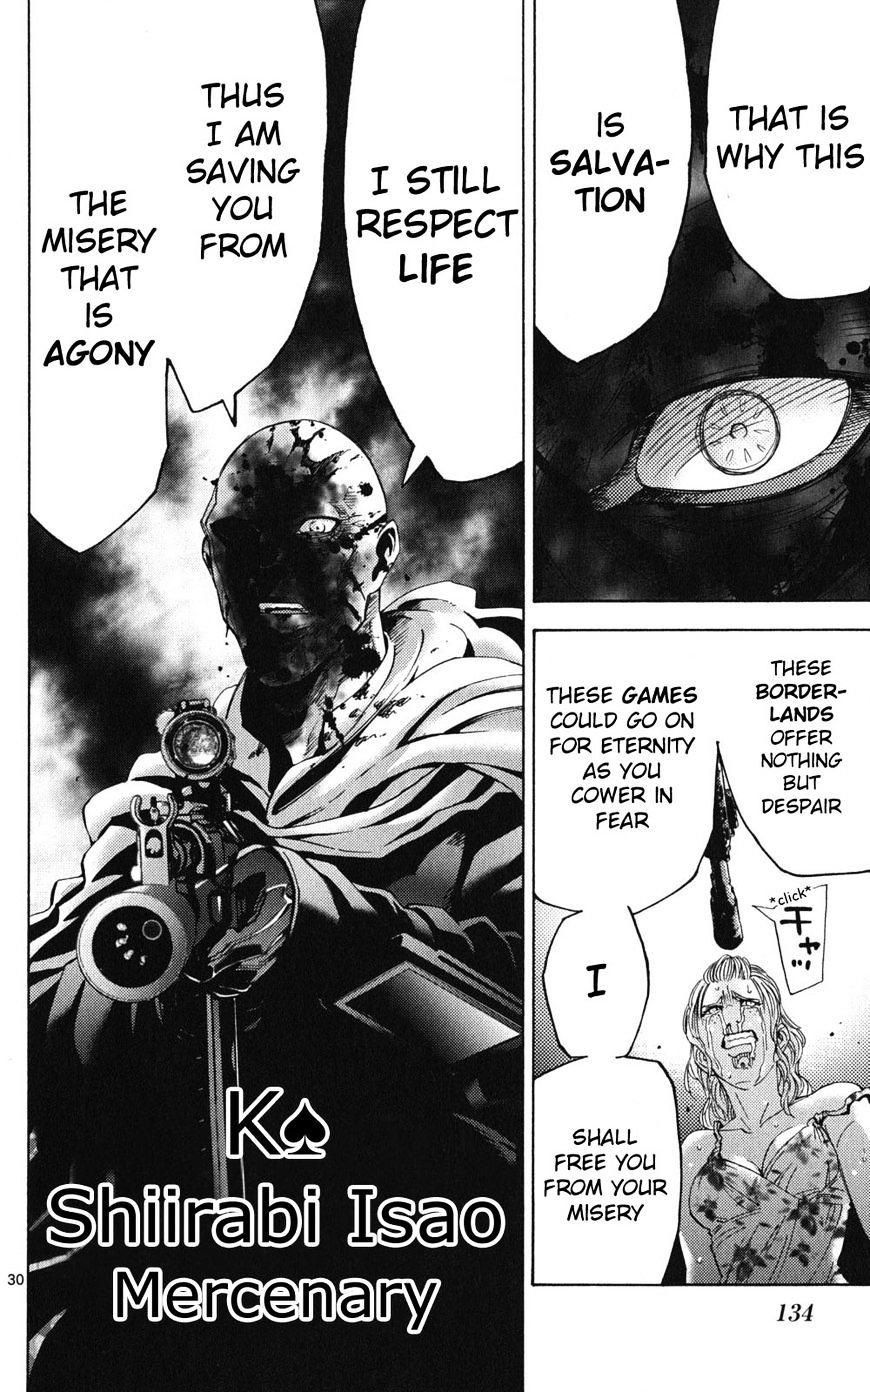 Imawa No Kuni No Alice Chapter 49.1 : Side Story 5 - King Of Spades (1) page 28 - Mangakakalot